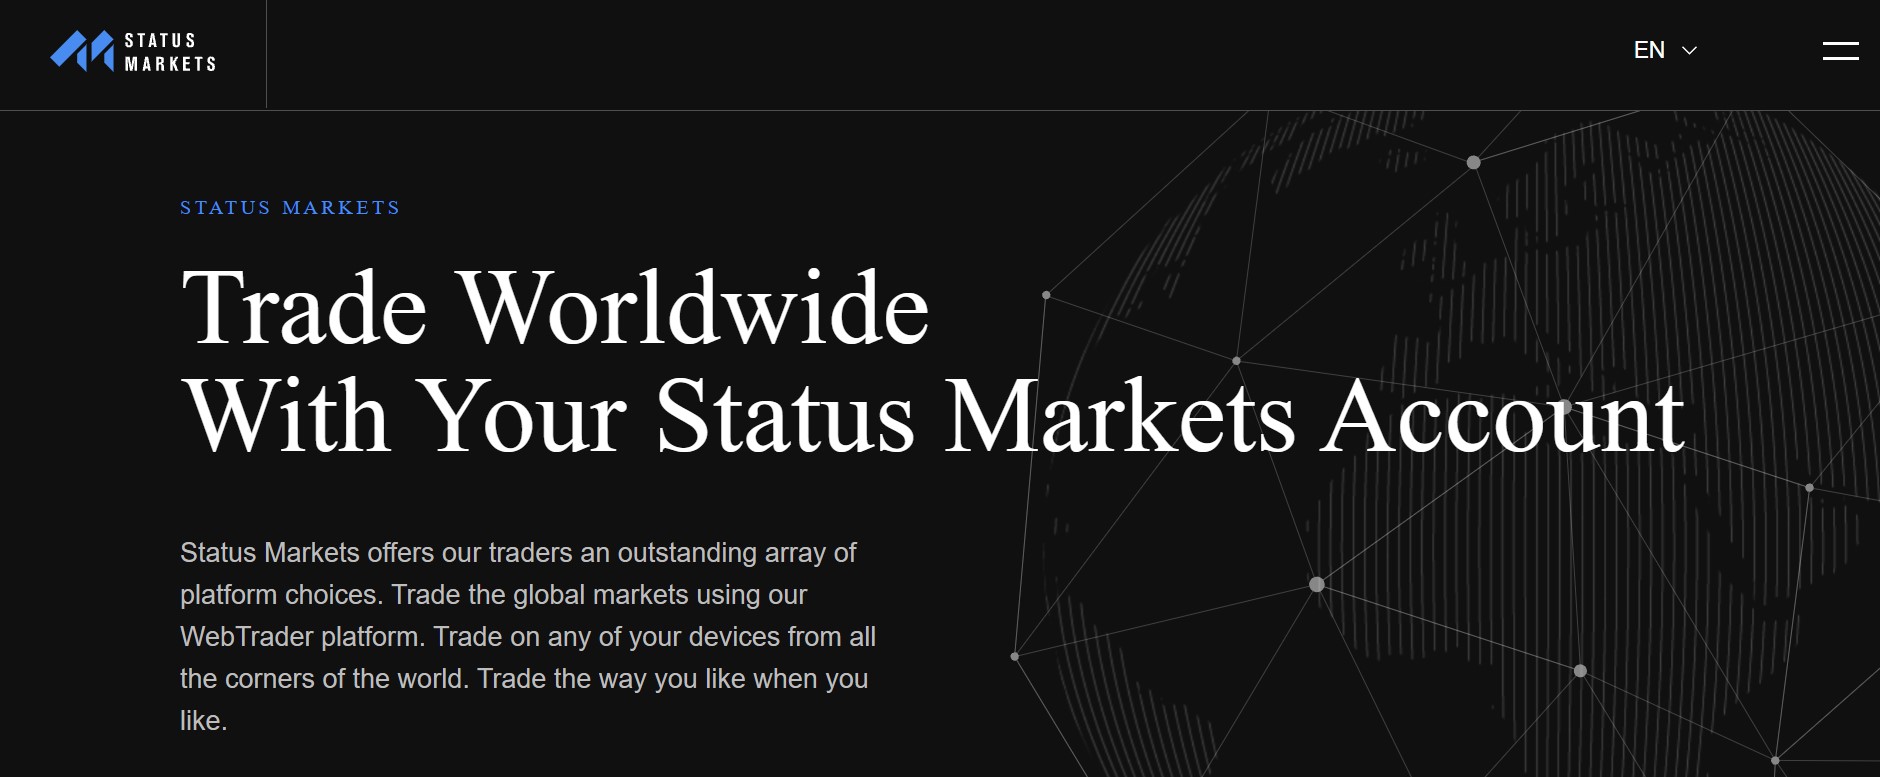 Status Markets website